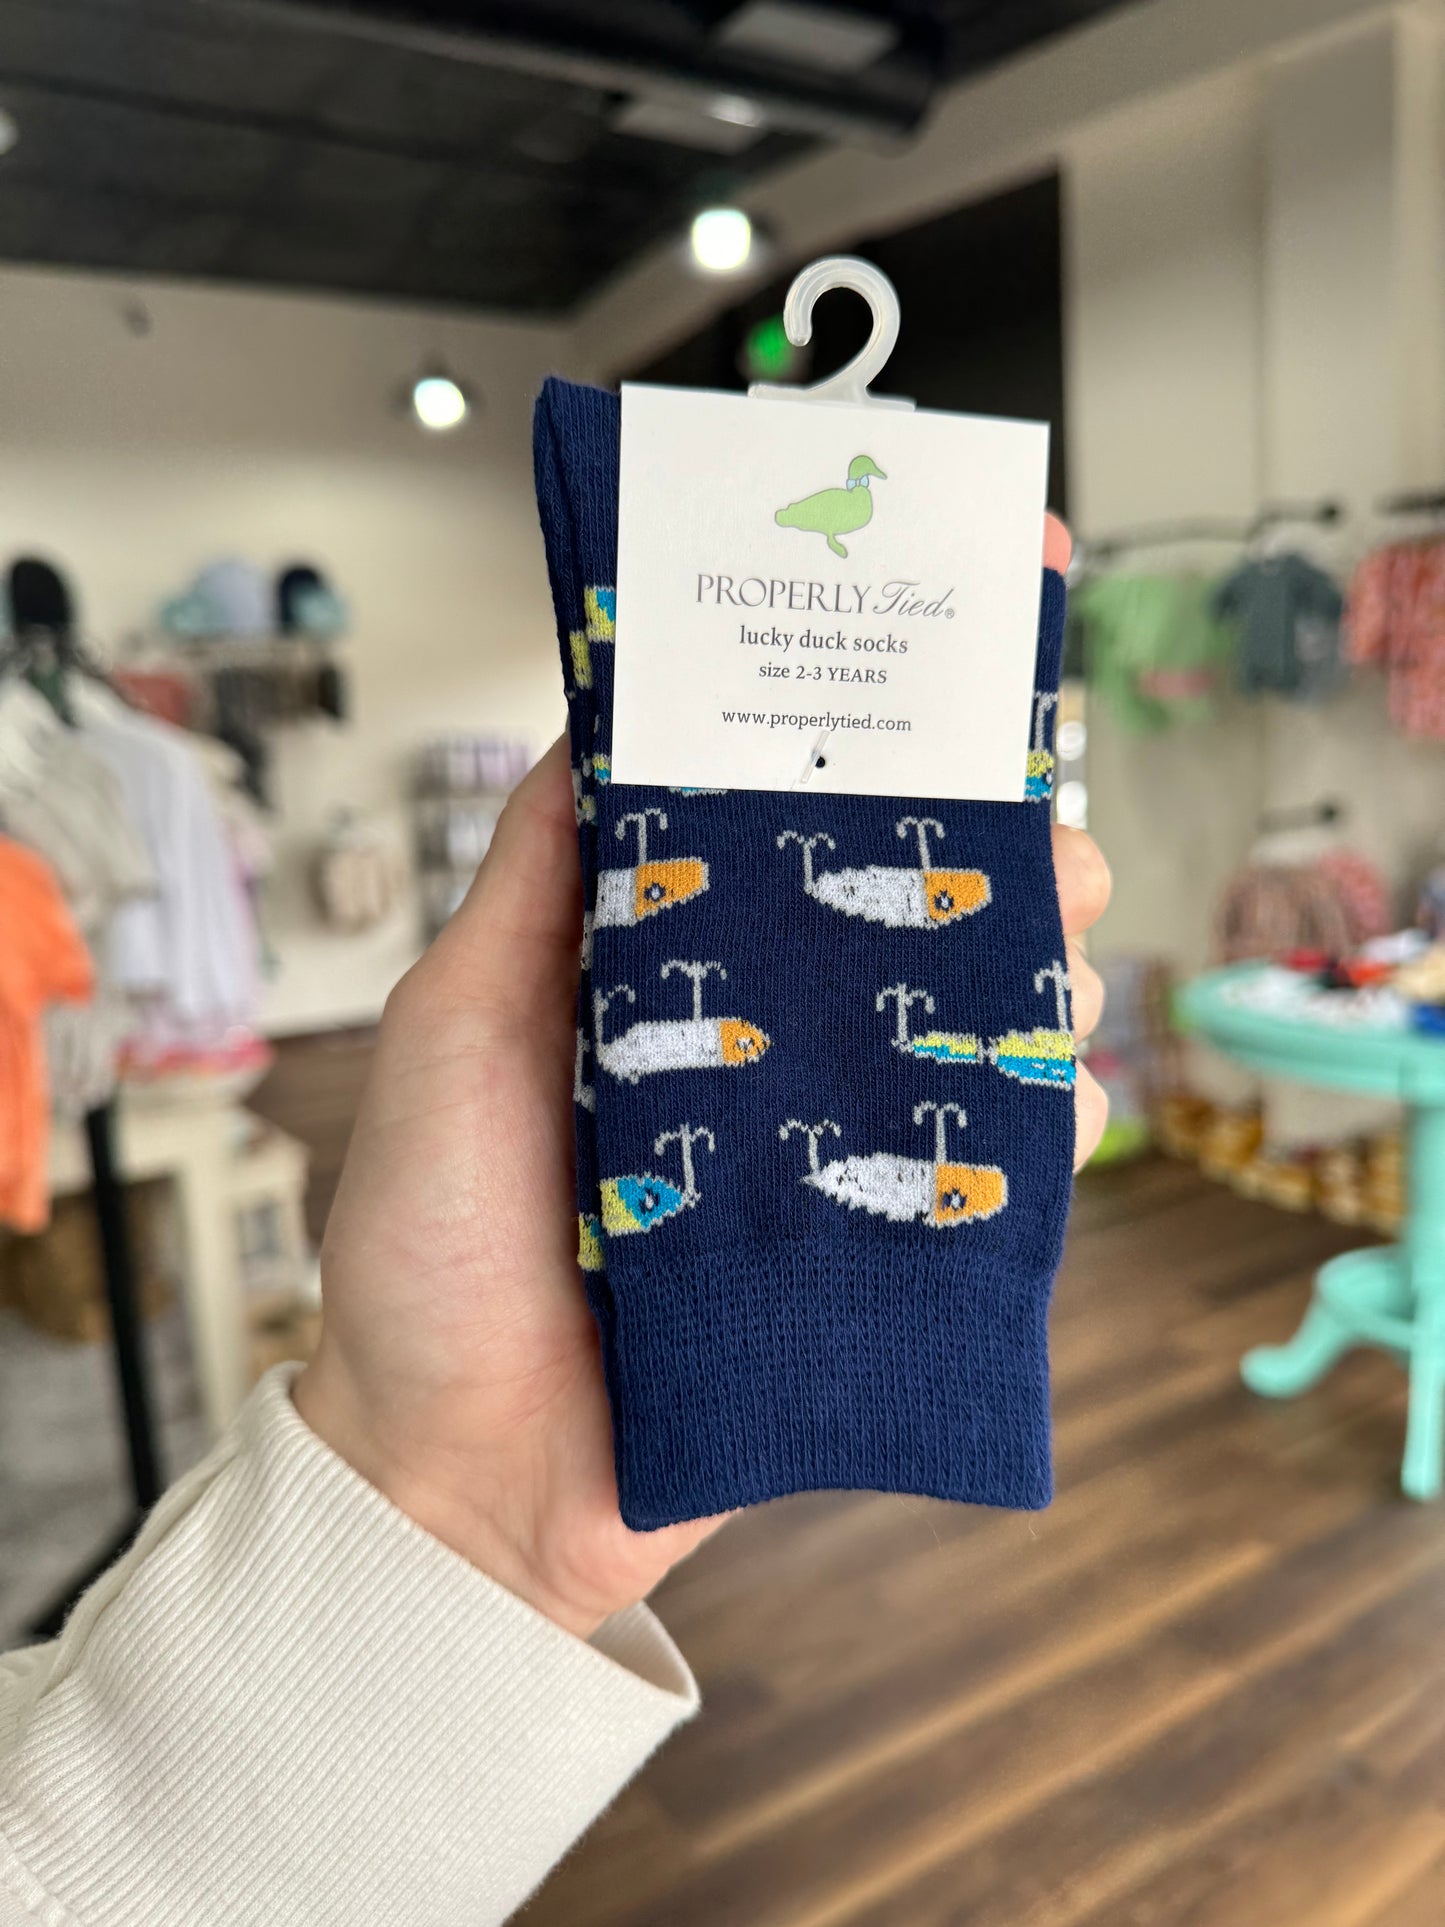 Properly Tied Fish Lure socks